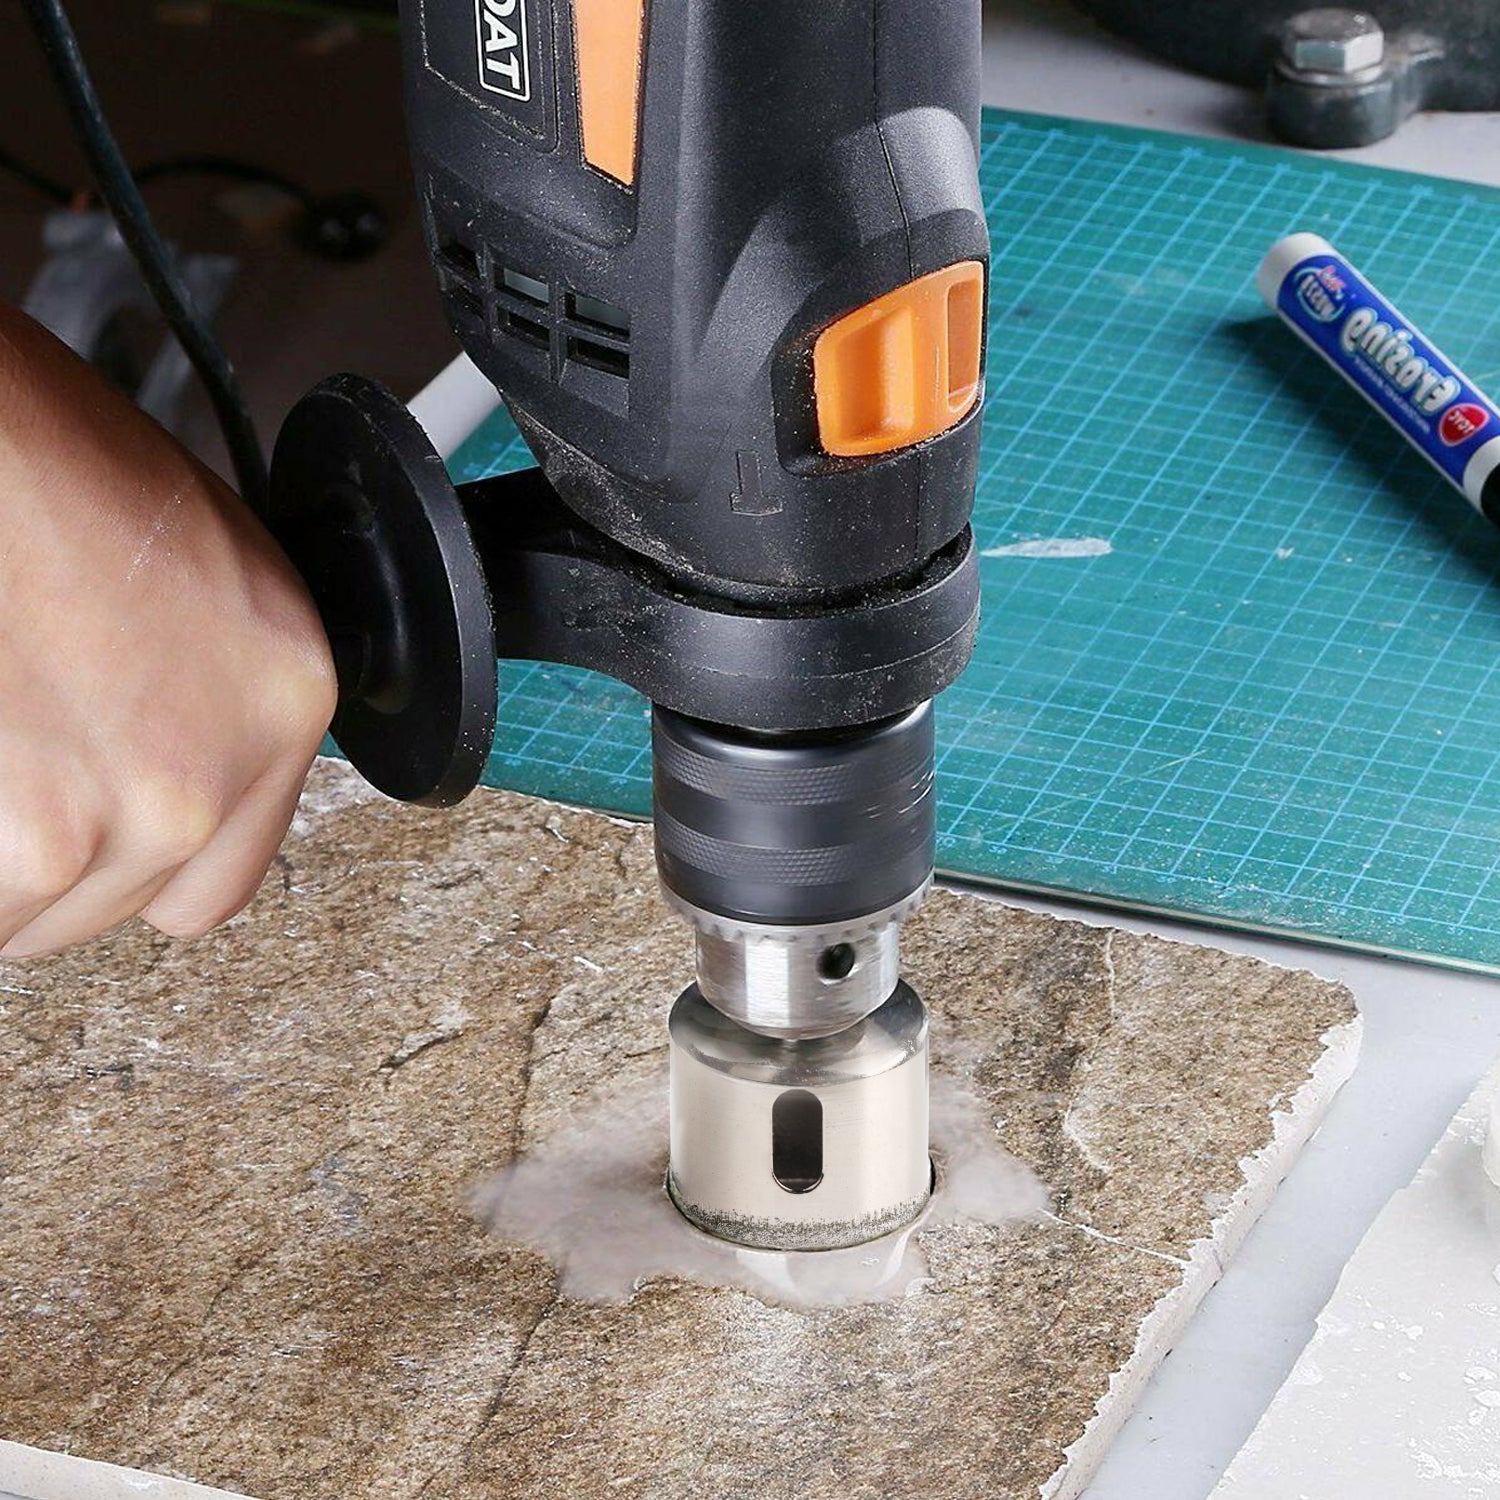 55mm Diamond Hole Saw Kit Tile Drill Bits for Ceramic, Glass, Tile, Porcelain, Marble, Granite